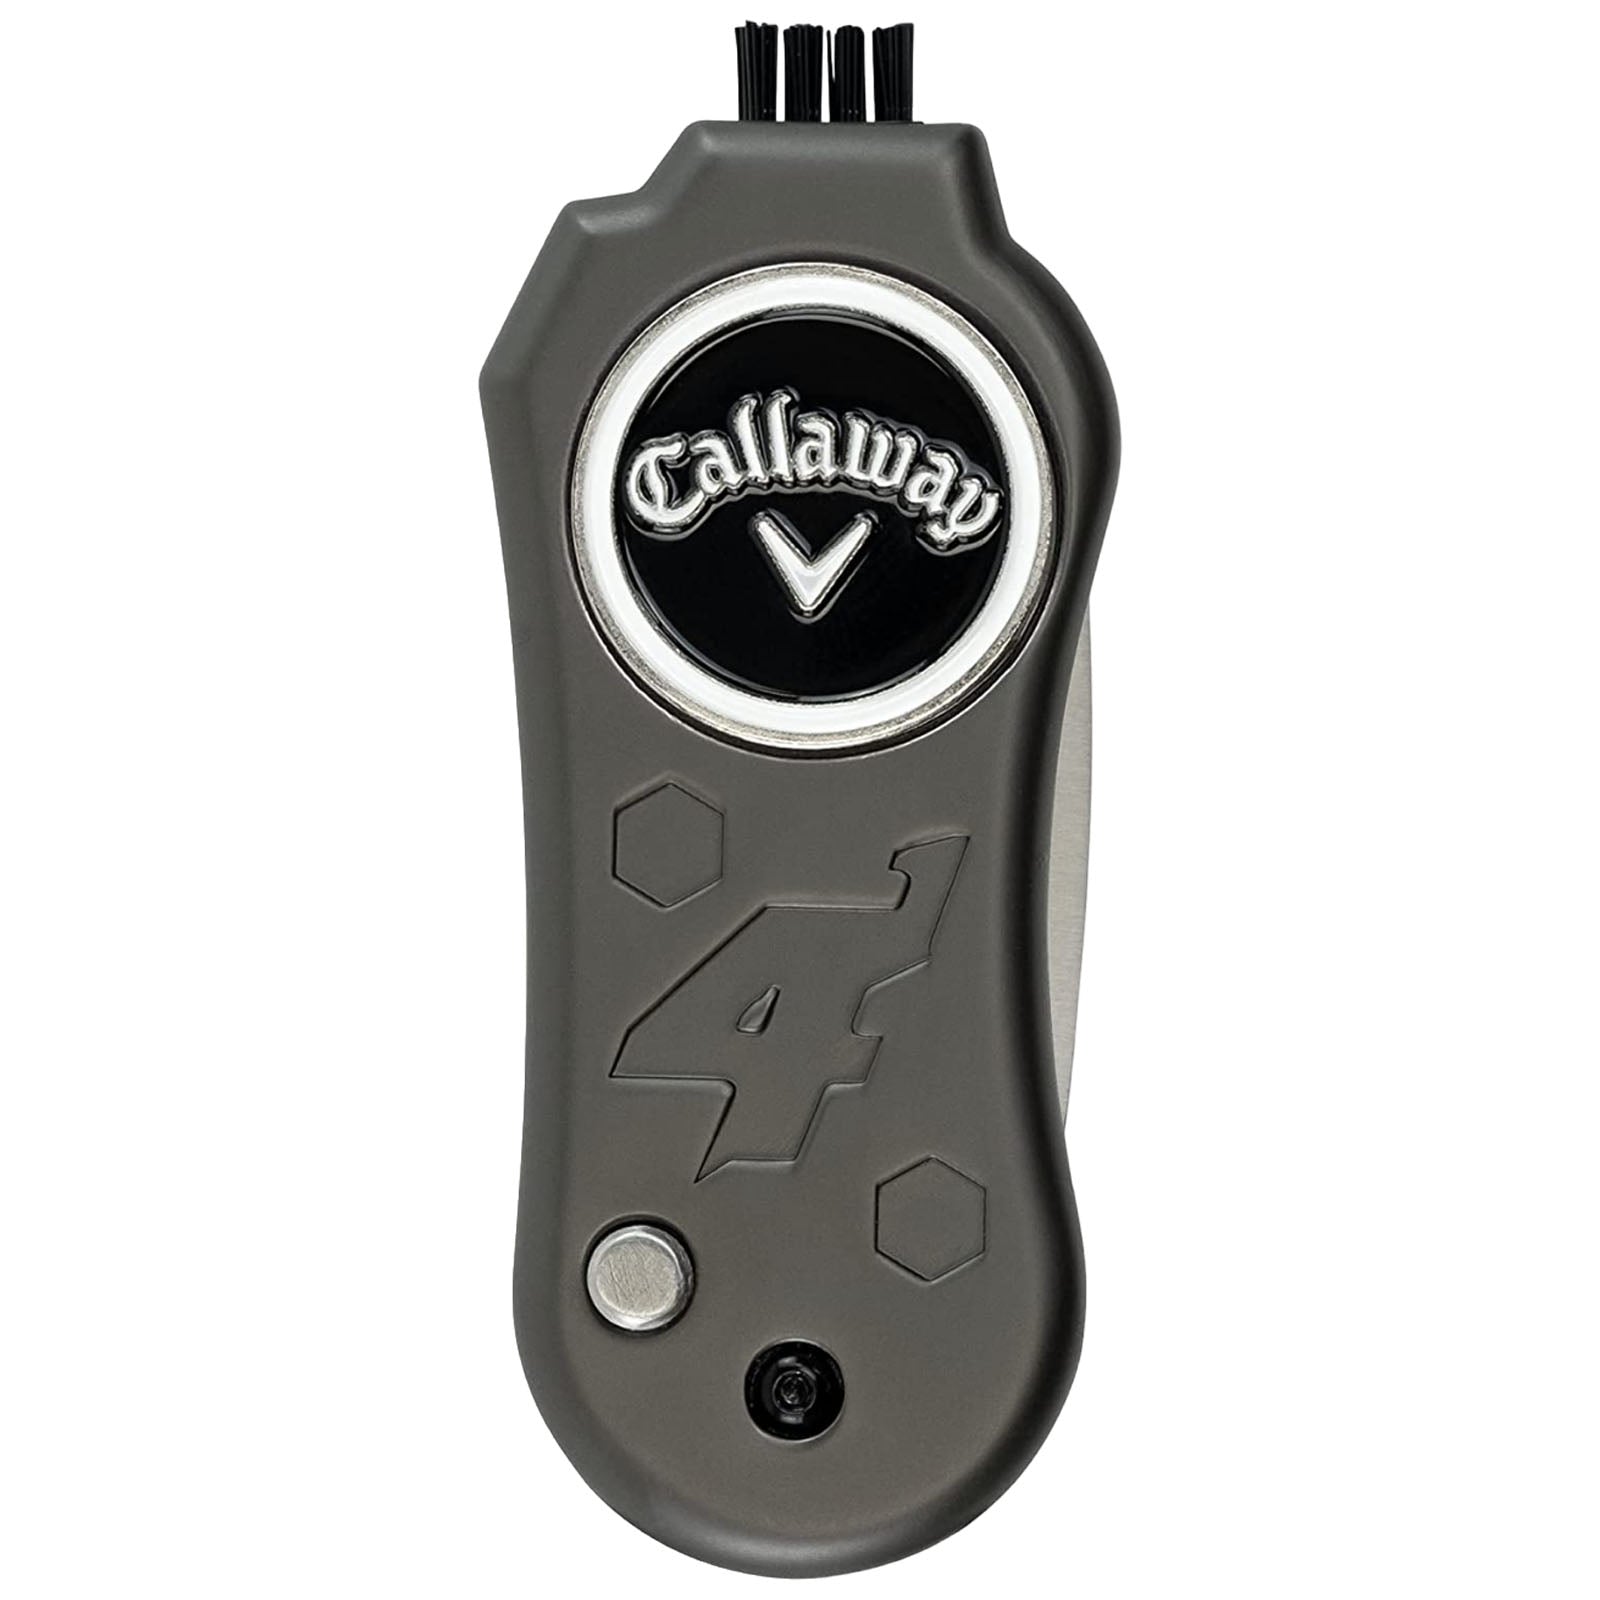 Callaway 4-in-1 Blade Divot Tool